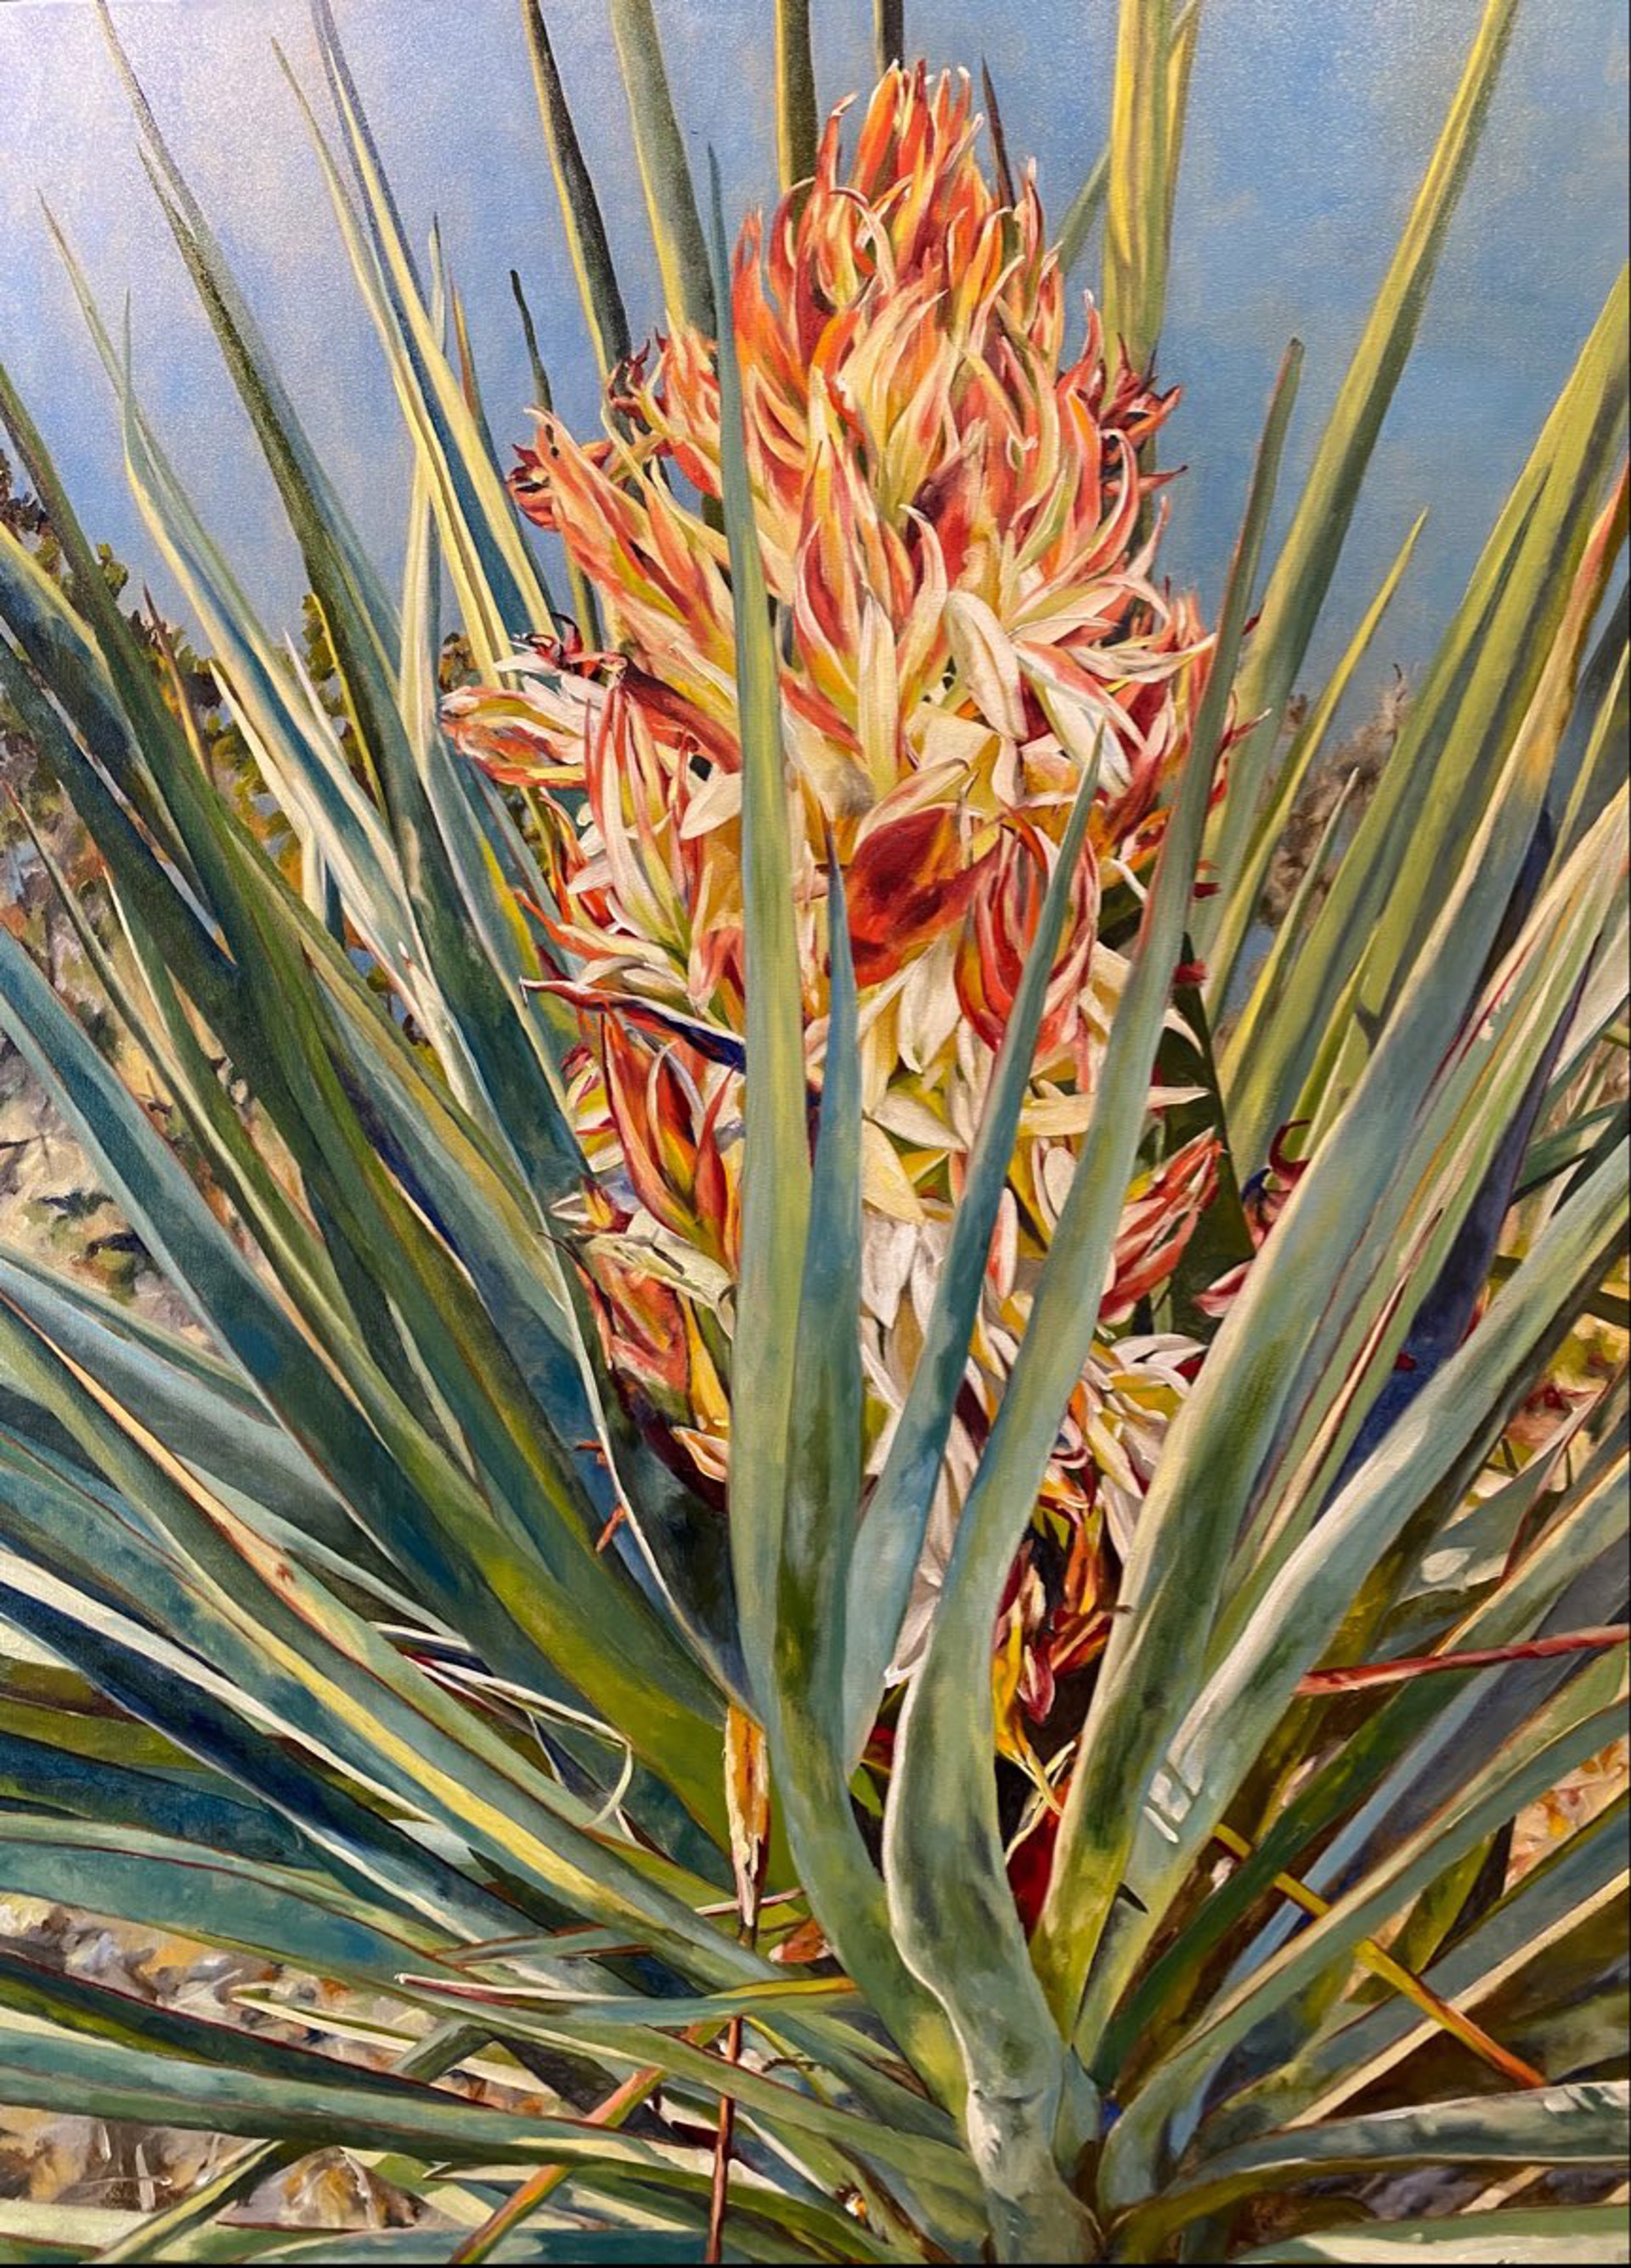 SOLD,  Yucca by Malou Flato